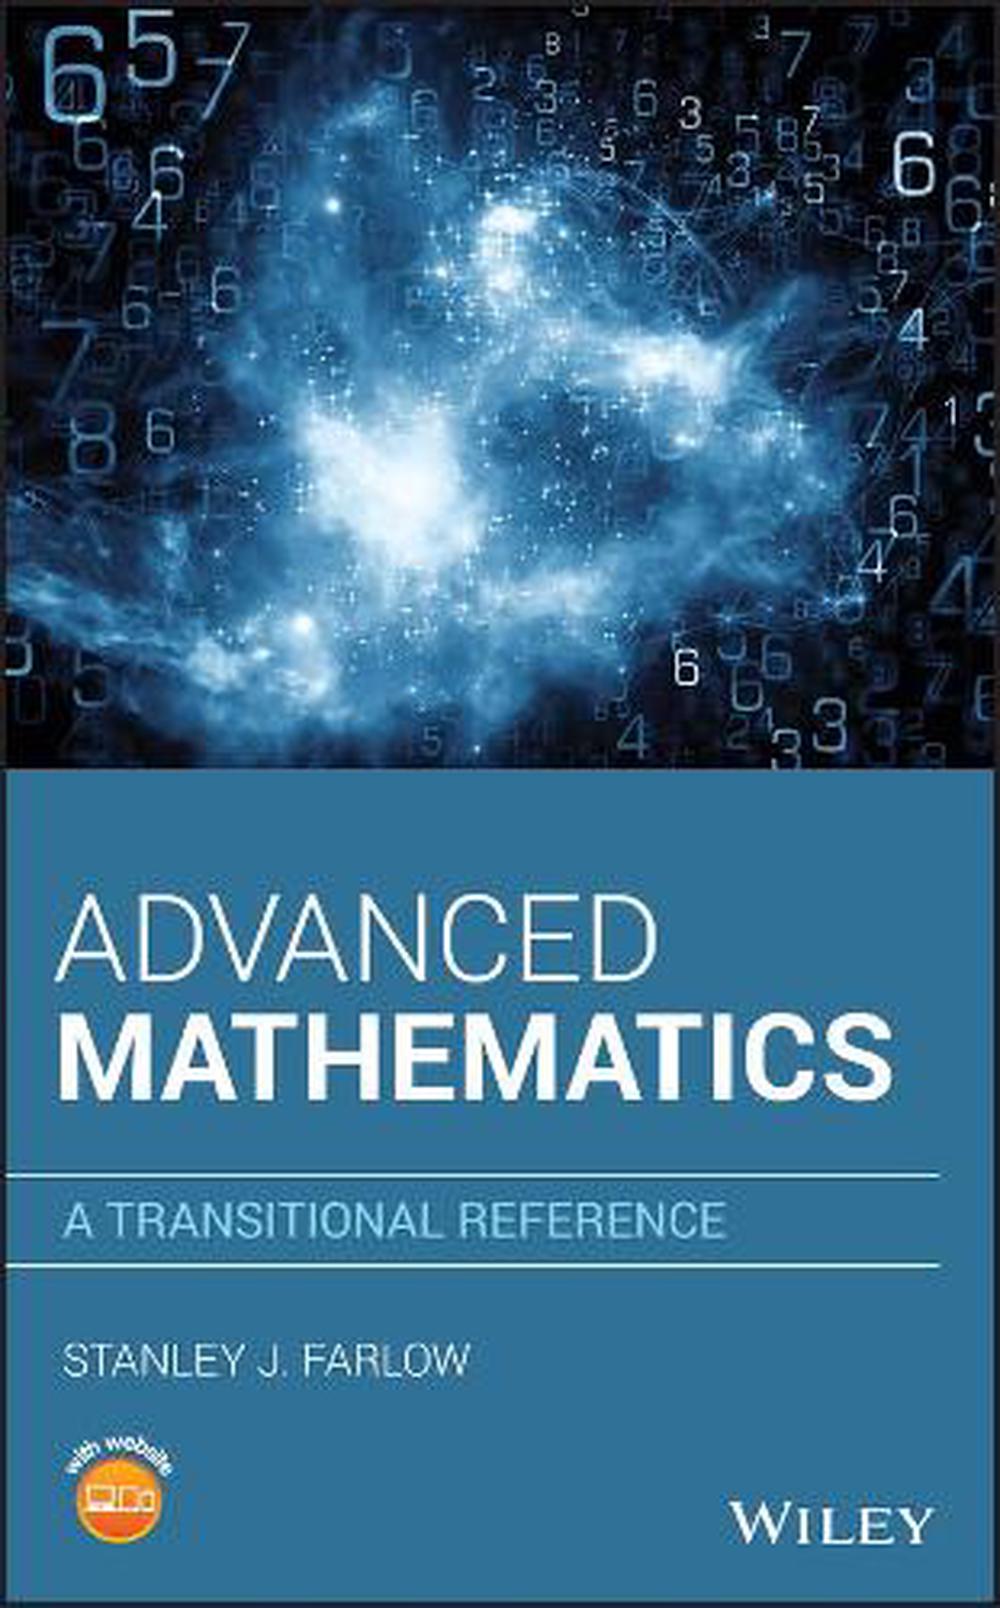 phd mathematics textbooks